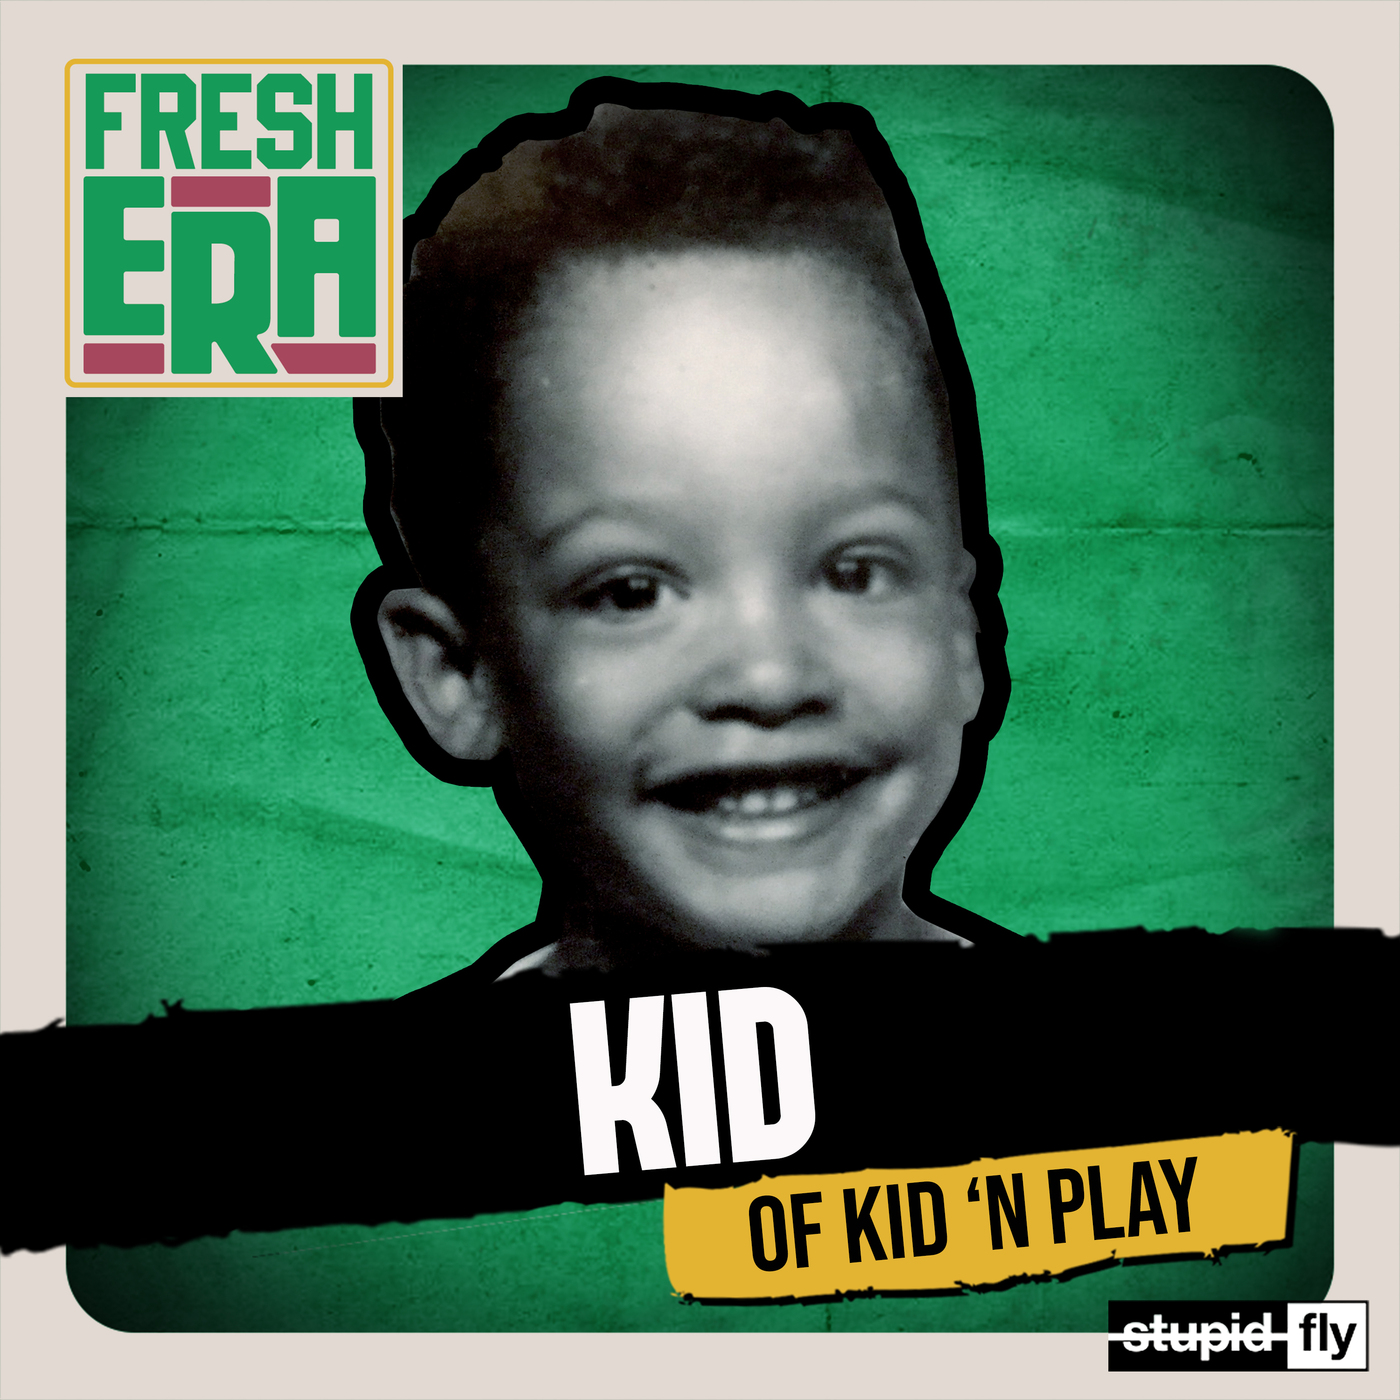 Kid from Kid 'n Play -- Inauguration Flat-Top Guy Should Be ASHAMED!!!